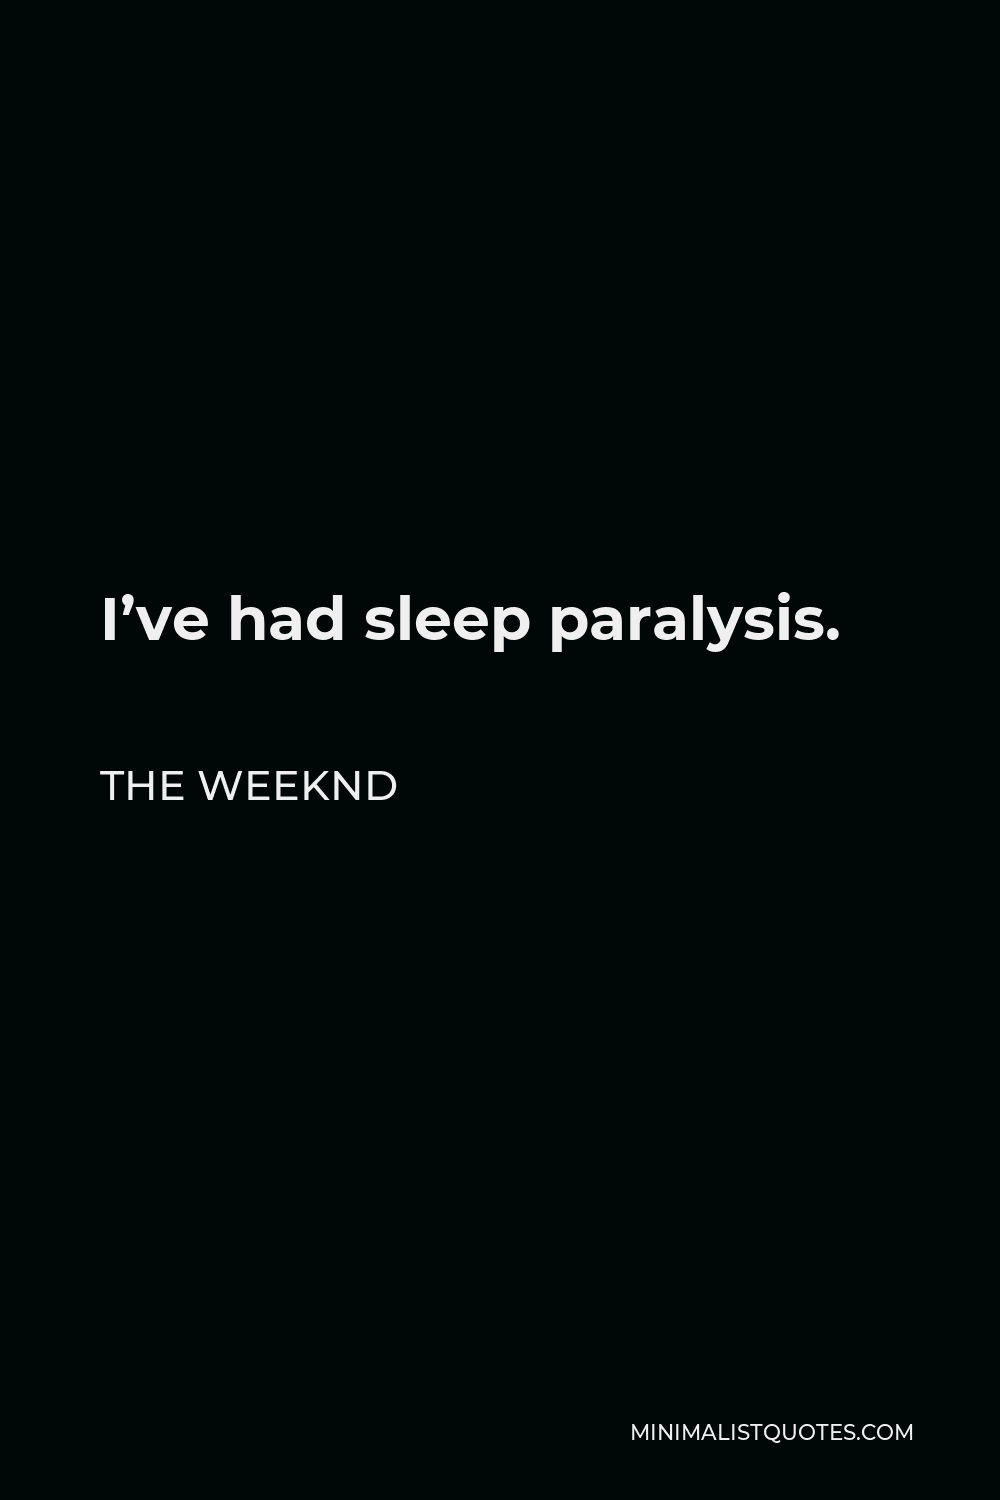 The Weeknd Quote - I’ve had sleep paralysis.